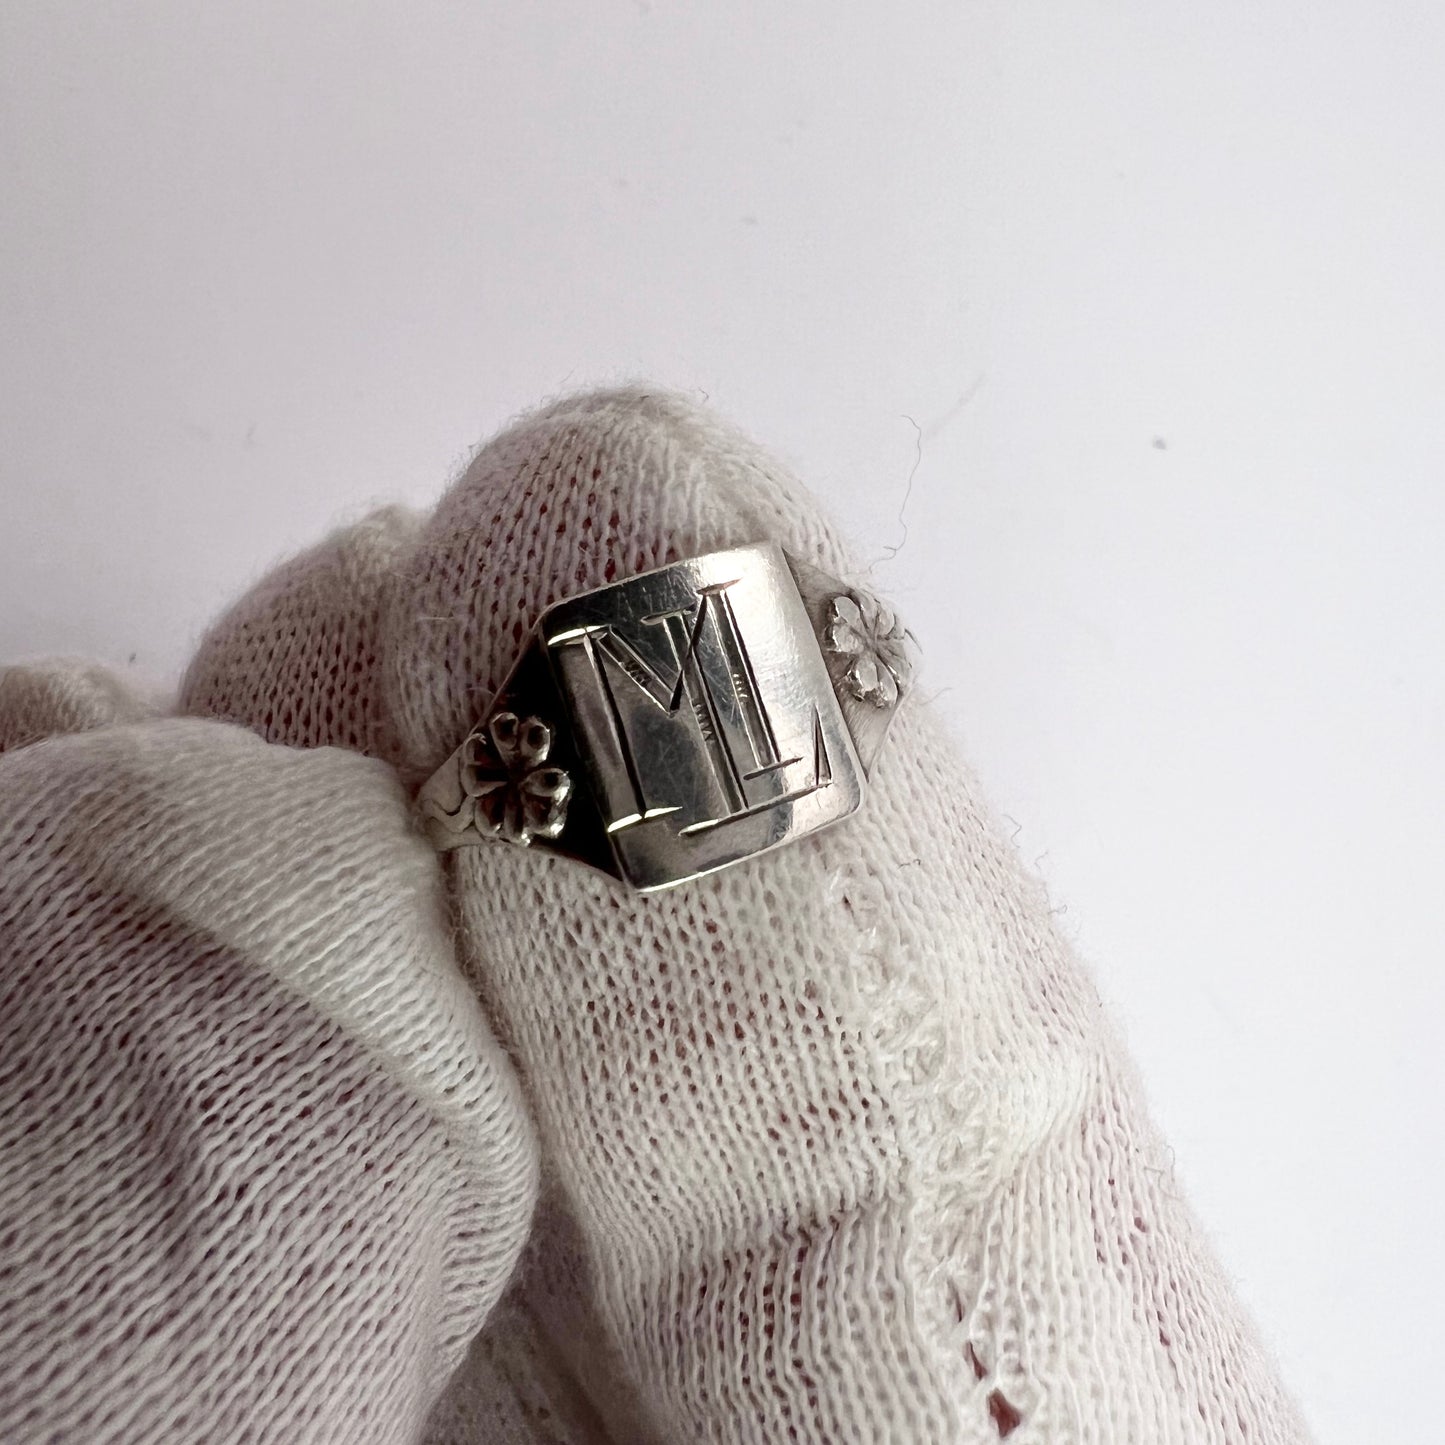 Wahlberg, Sweden 1947. Vintage Sterling Silver Woman Signet Ring. ML